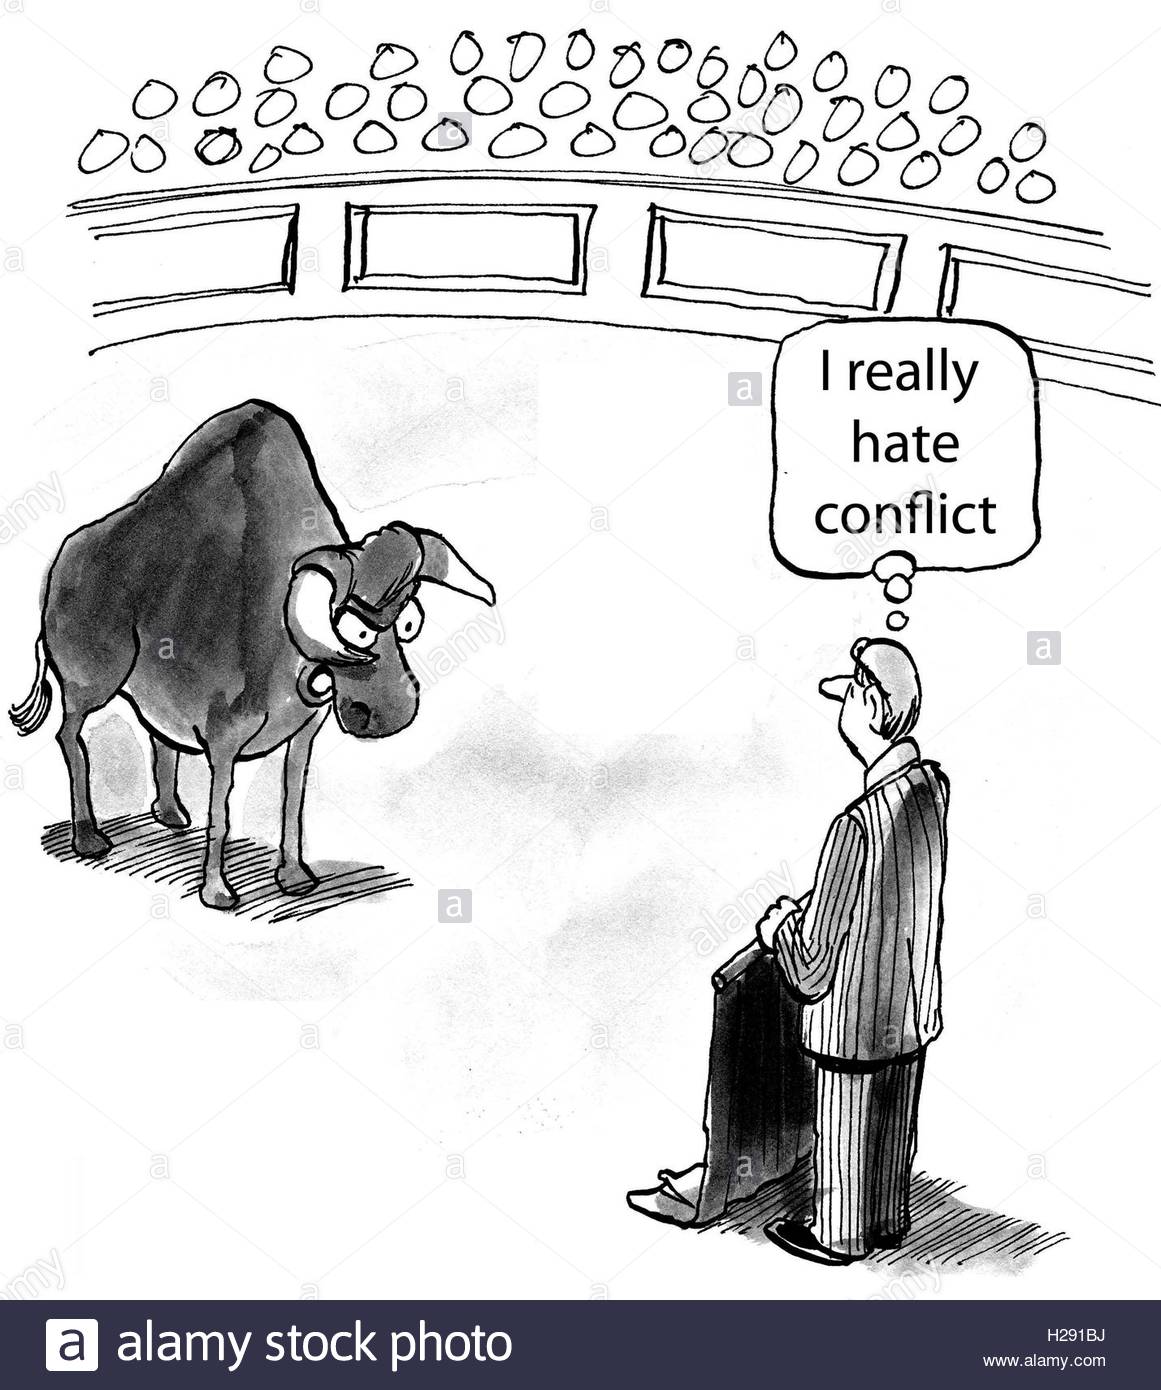 Conflict Resolution Cartoon Stock Photos & Conflict Resolution Cartoon